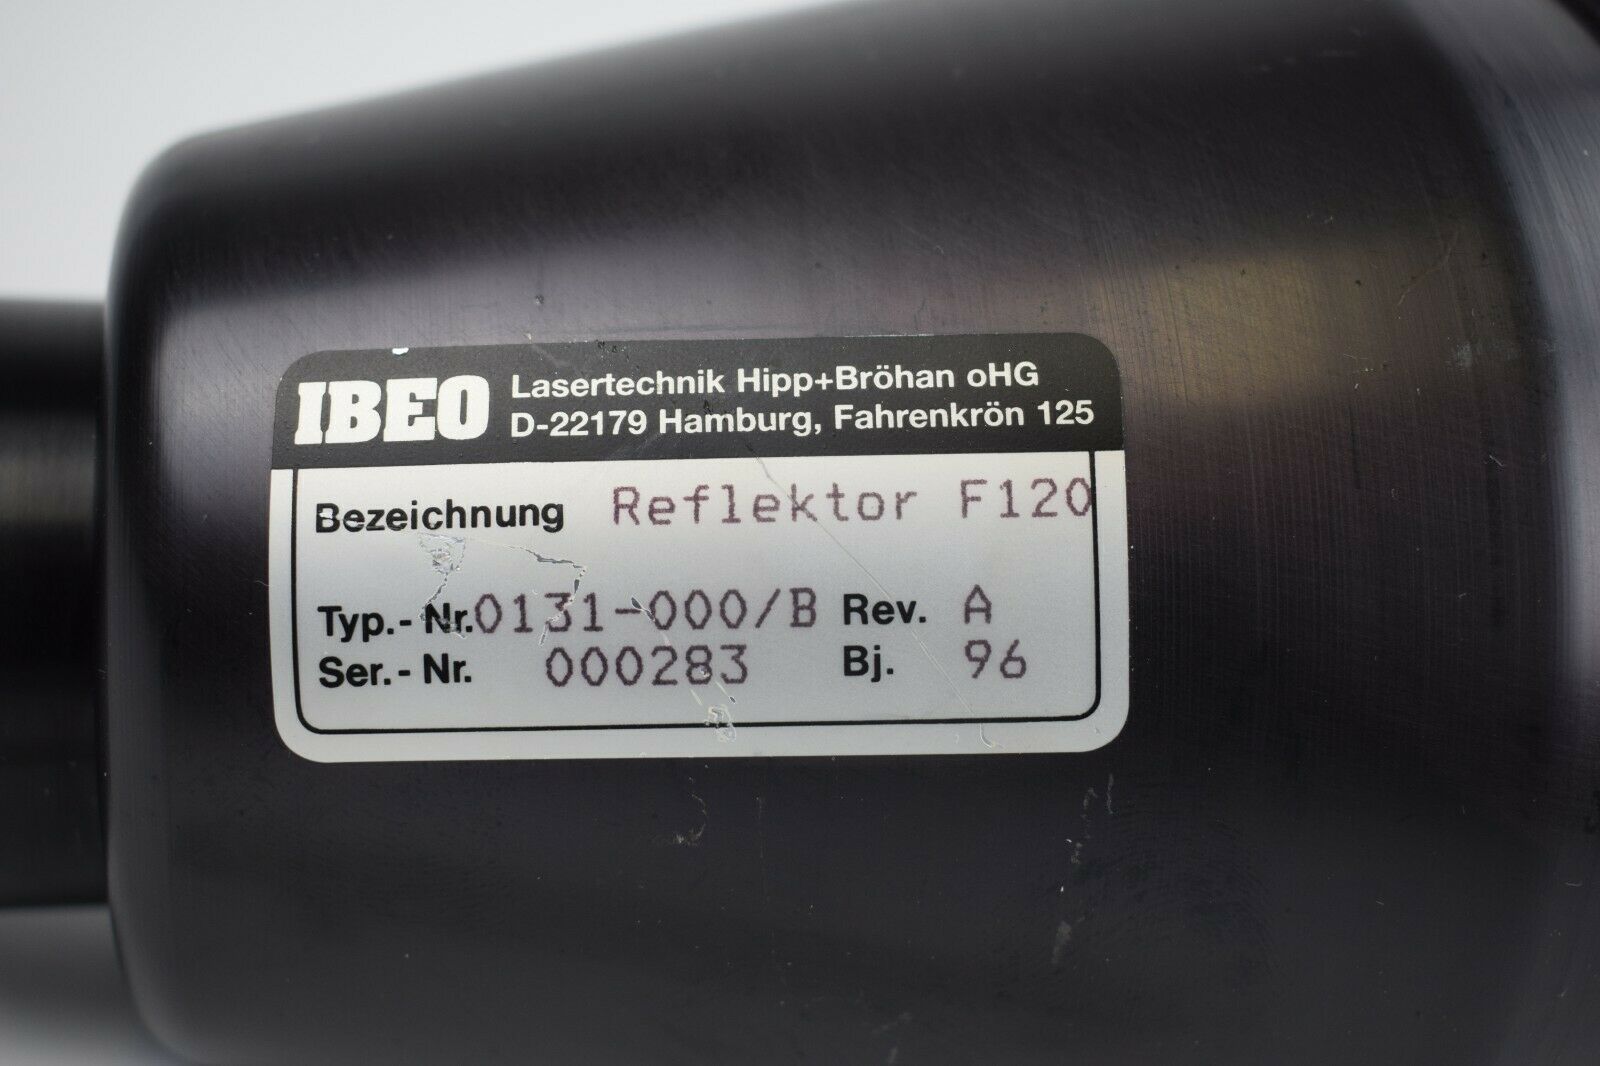 IBEO Reflektor F120 0131-000/B Rev. A